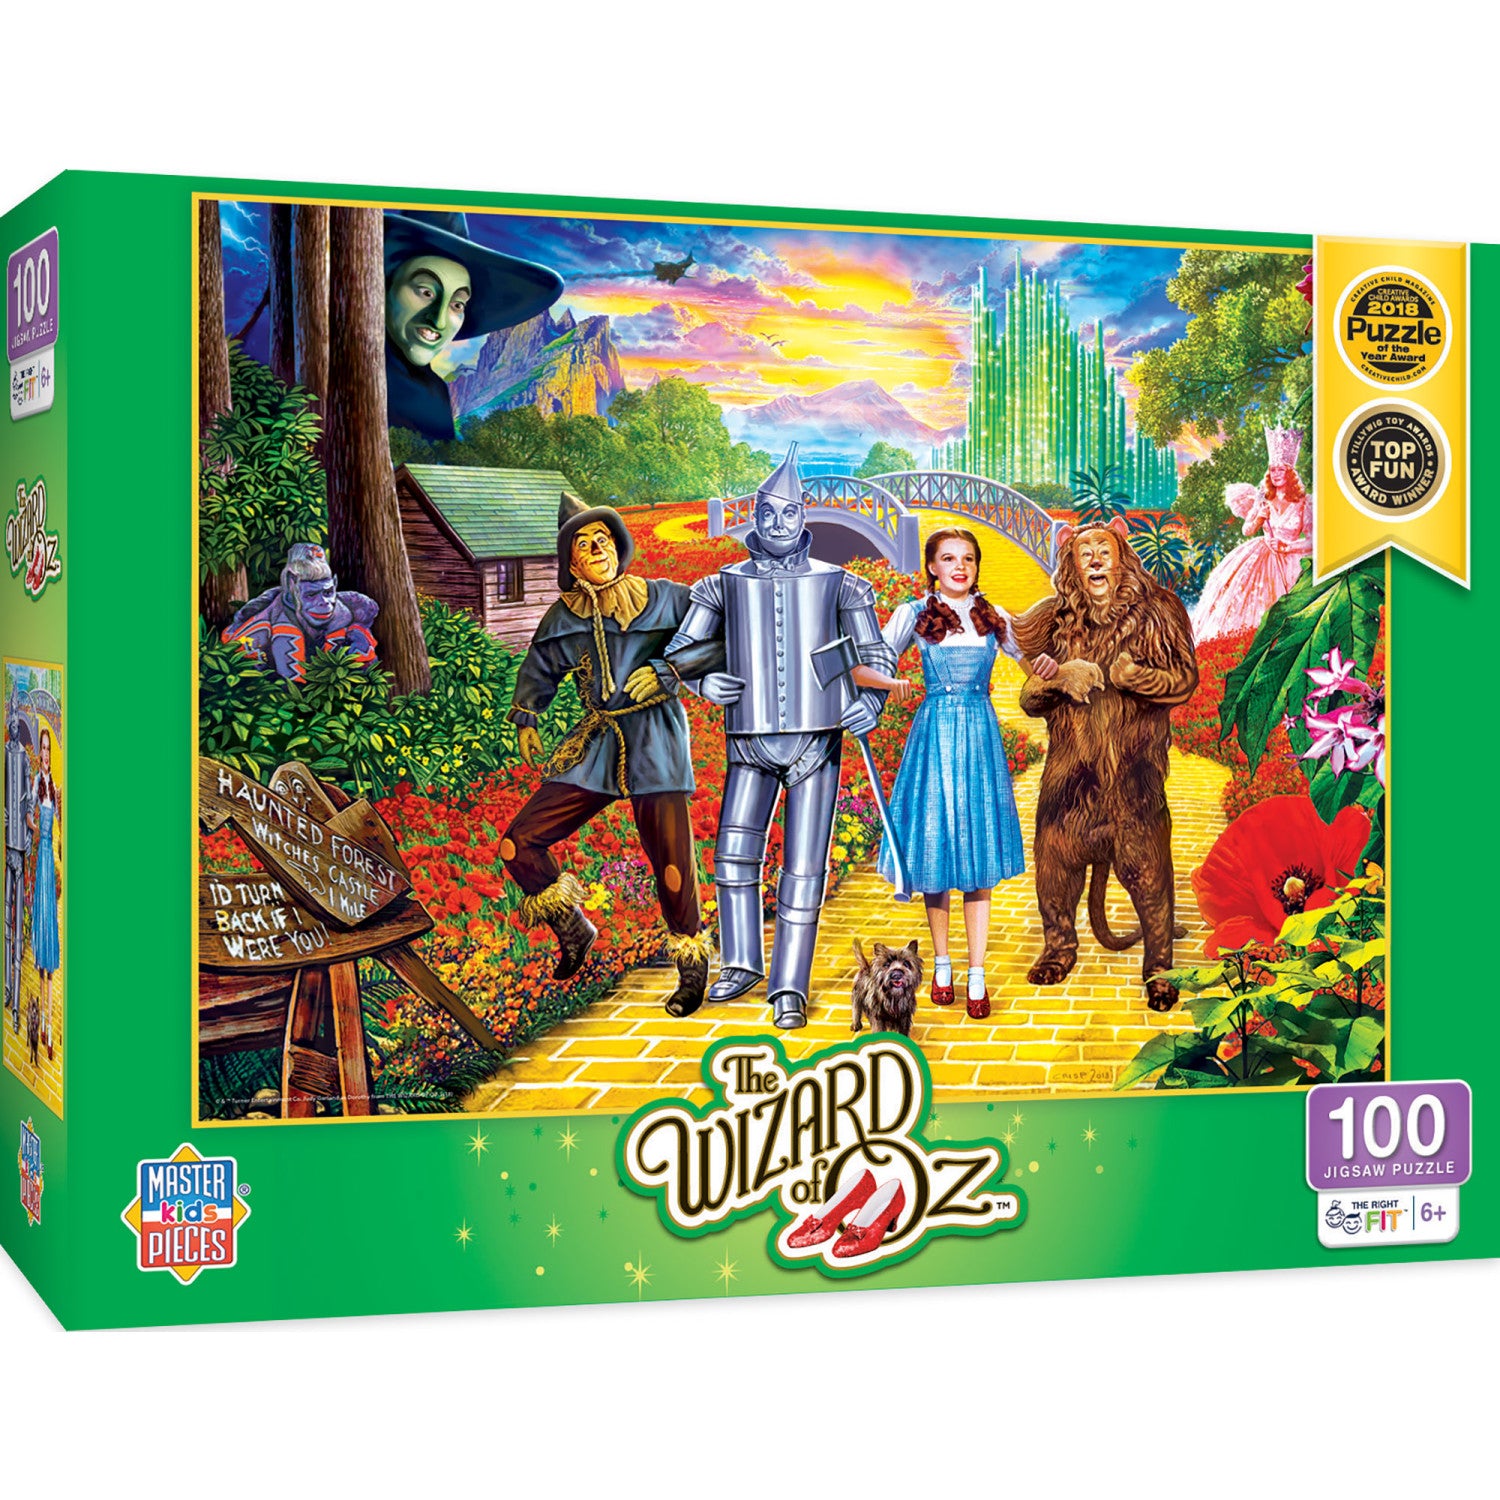 The Wizard of Oz - 100 Piece Jigsaw Puzzle